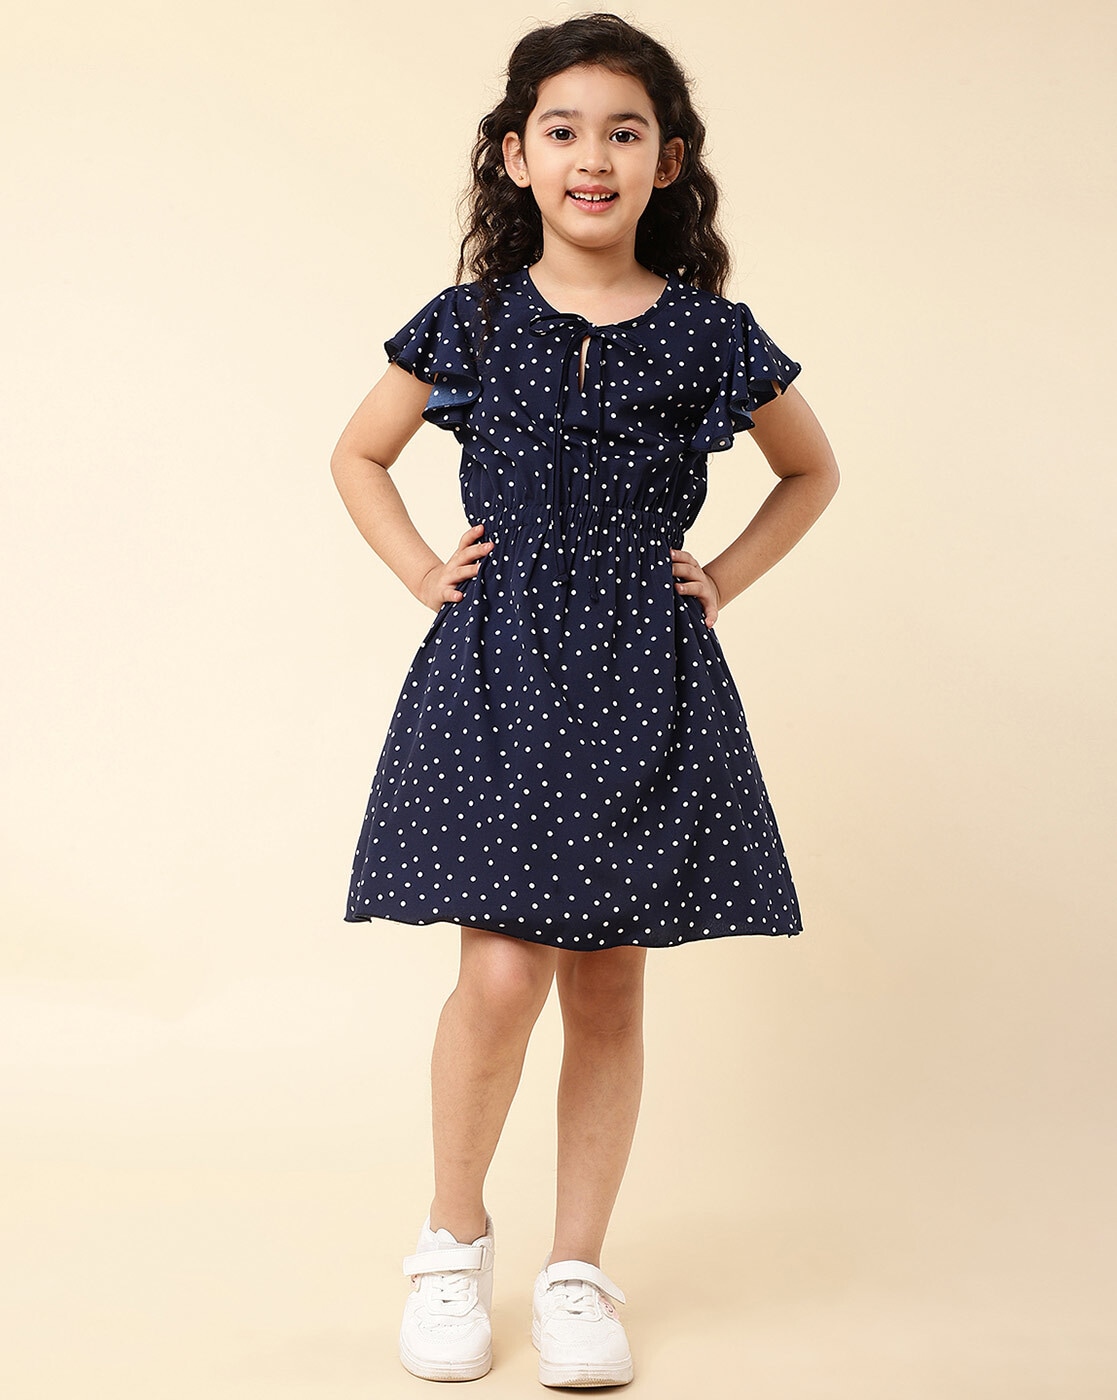 I Love Lucy Inspired Dress - Girl's Blue and White Polka Dot Dress –  Vintage Galeria